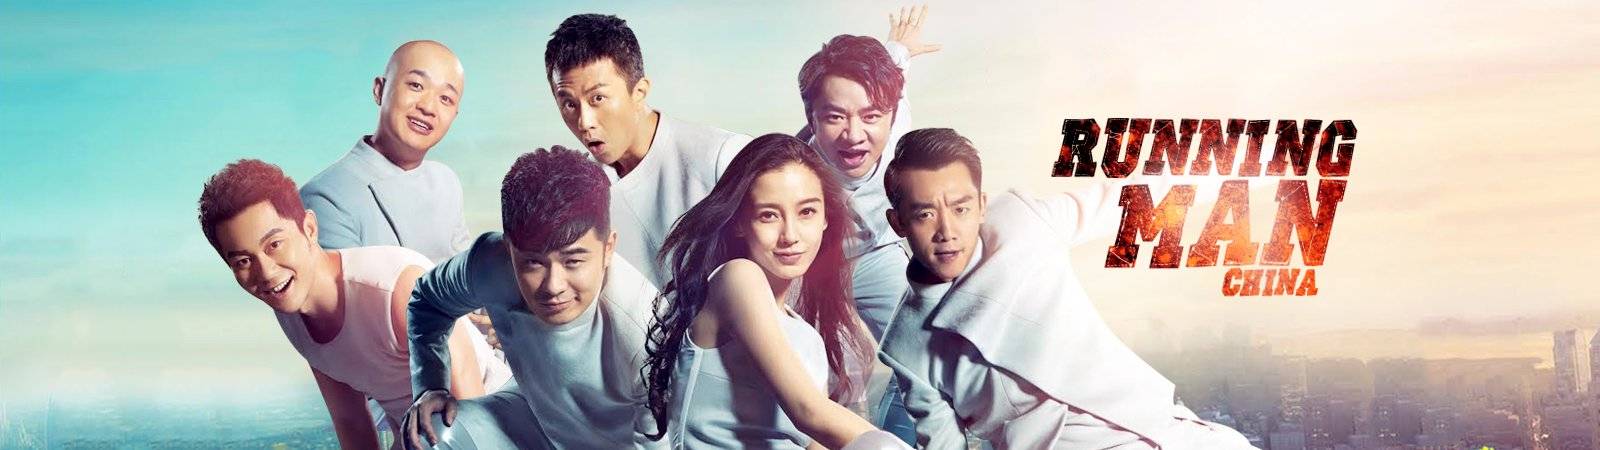 Brother China Season 2 (2015)